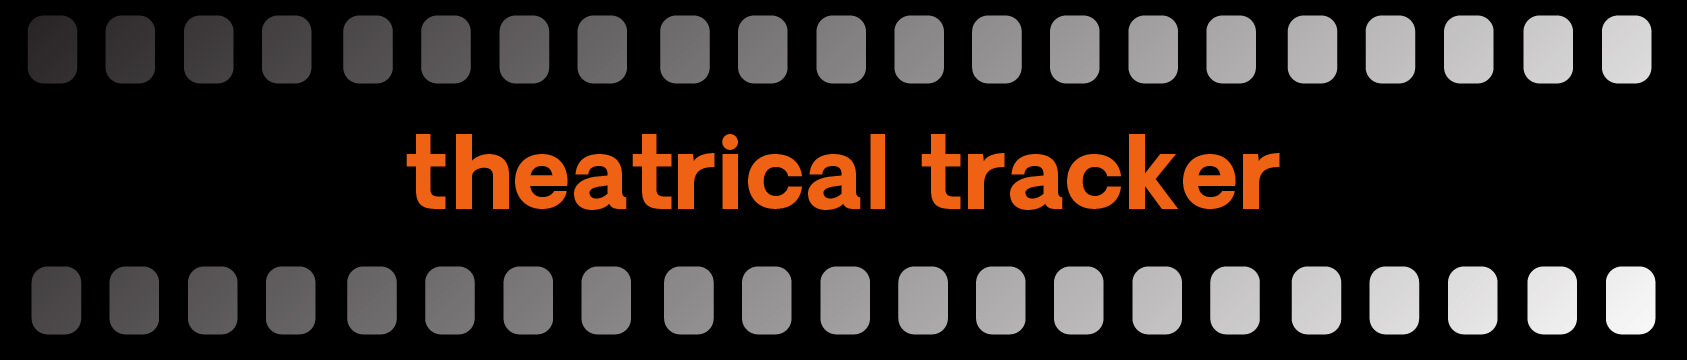 Licensing International Theatrical Film Tracker image